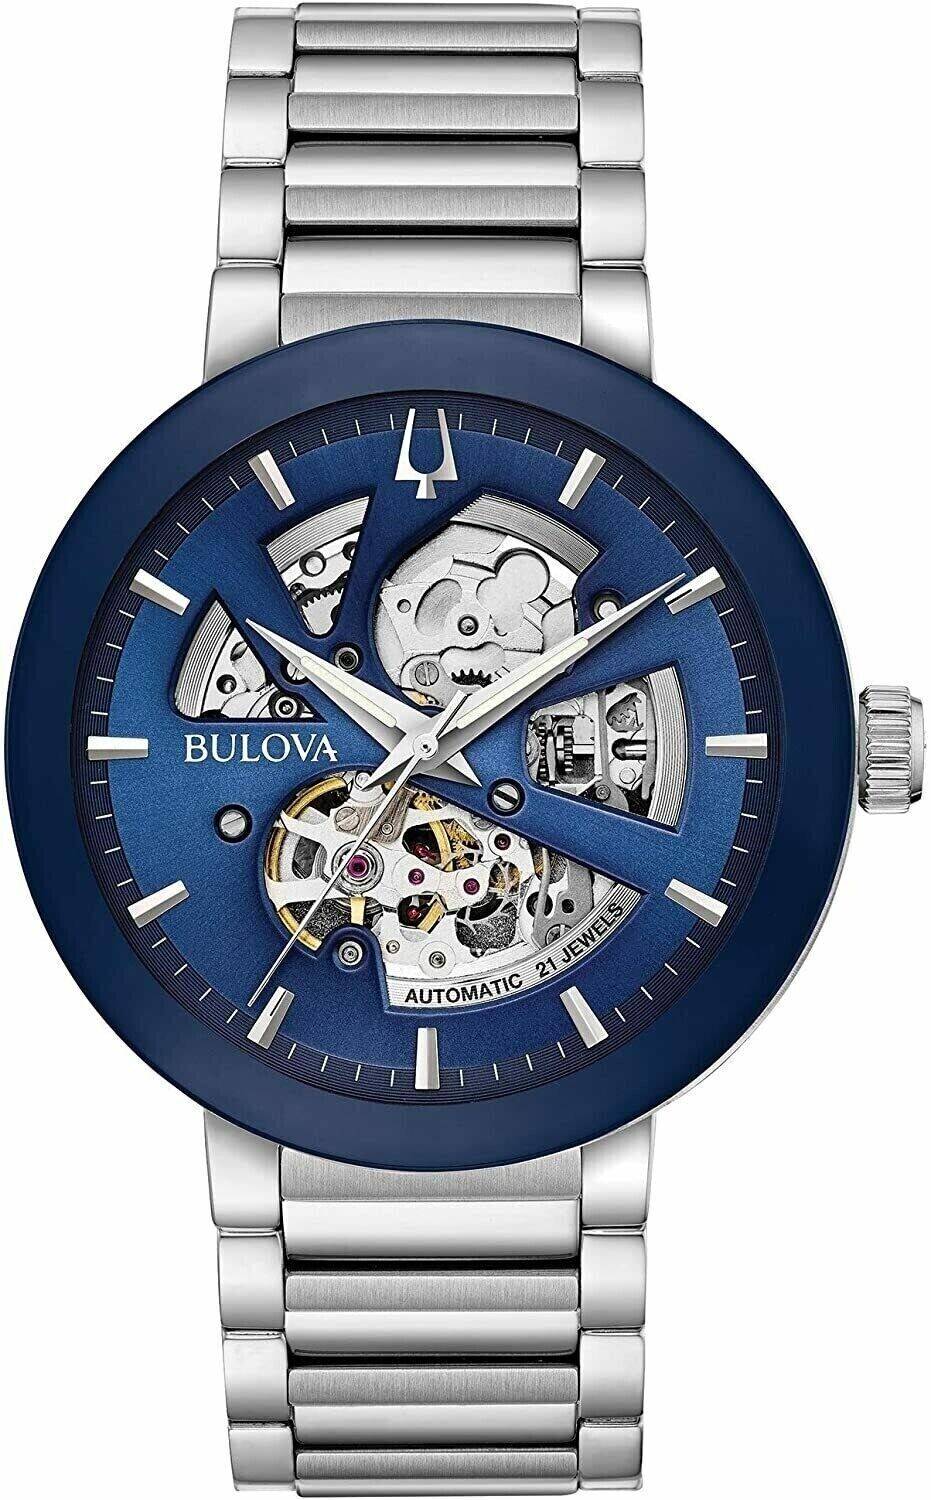 Bulova Futuro 96A204 42mm automatic men's watch blue dial stainless steel bracelet 30m Water resist